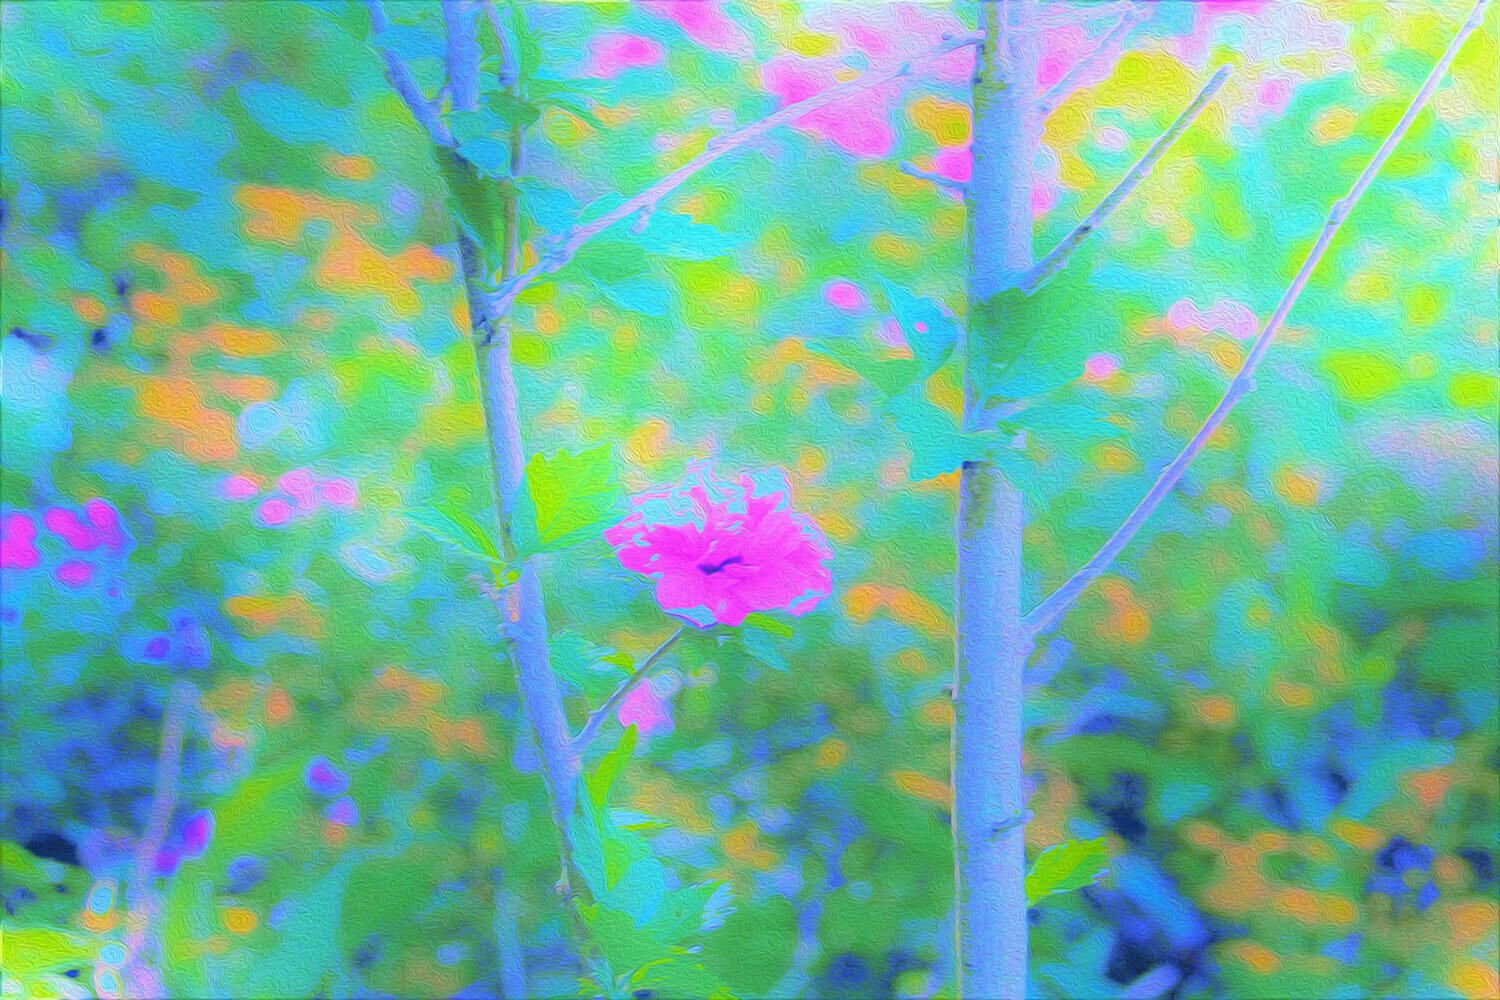 Pink Rose of Sharon Impressionistic Garden